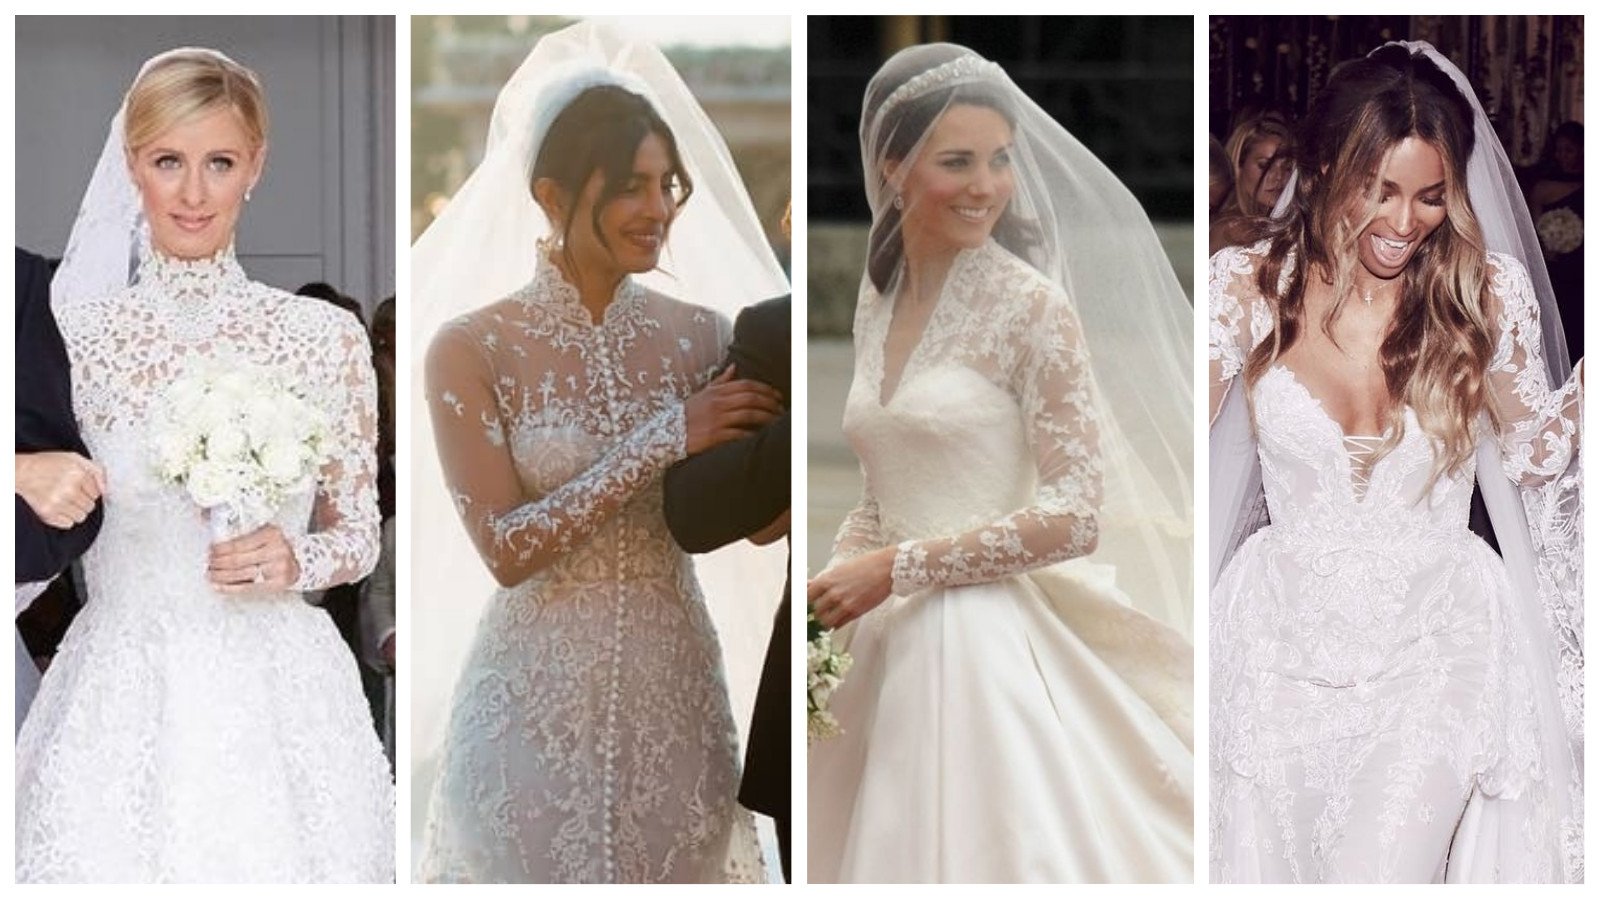 Nicky Hilton Rothschild, Priyanka Chopra Jonas, Kate Middleton and Ciara all rocked sheer wedding dresses at their weddings. Photos: @nickyhilton, @priyankachopra, @ciara/Instagram; AFP